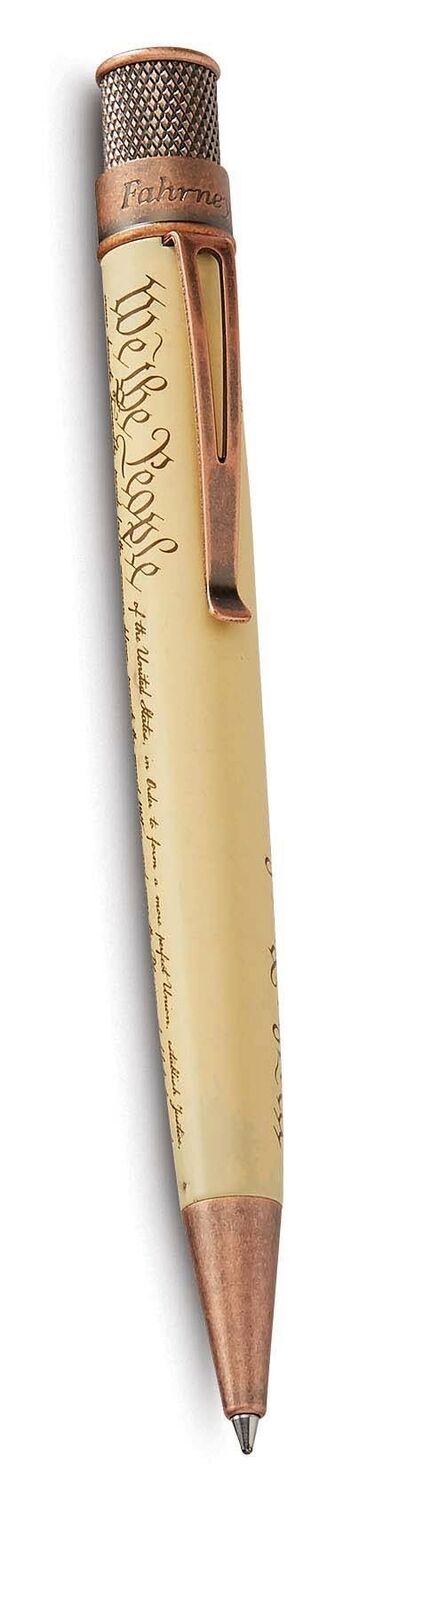 Retro 51 Fahrney's Constitution Rollerball Pen